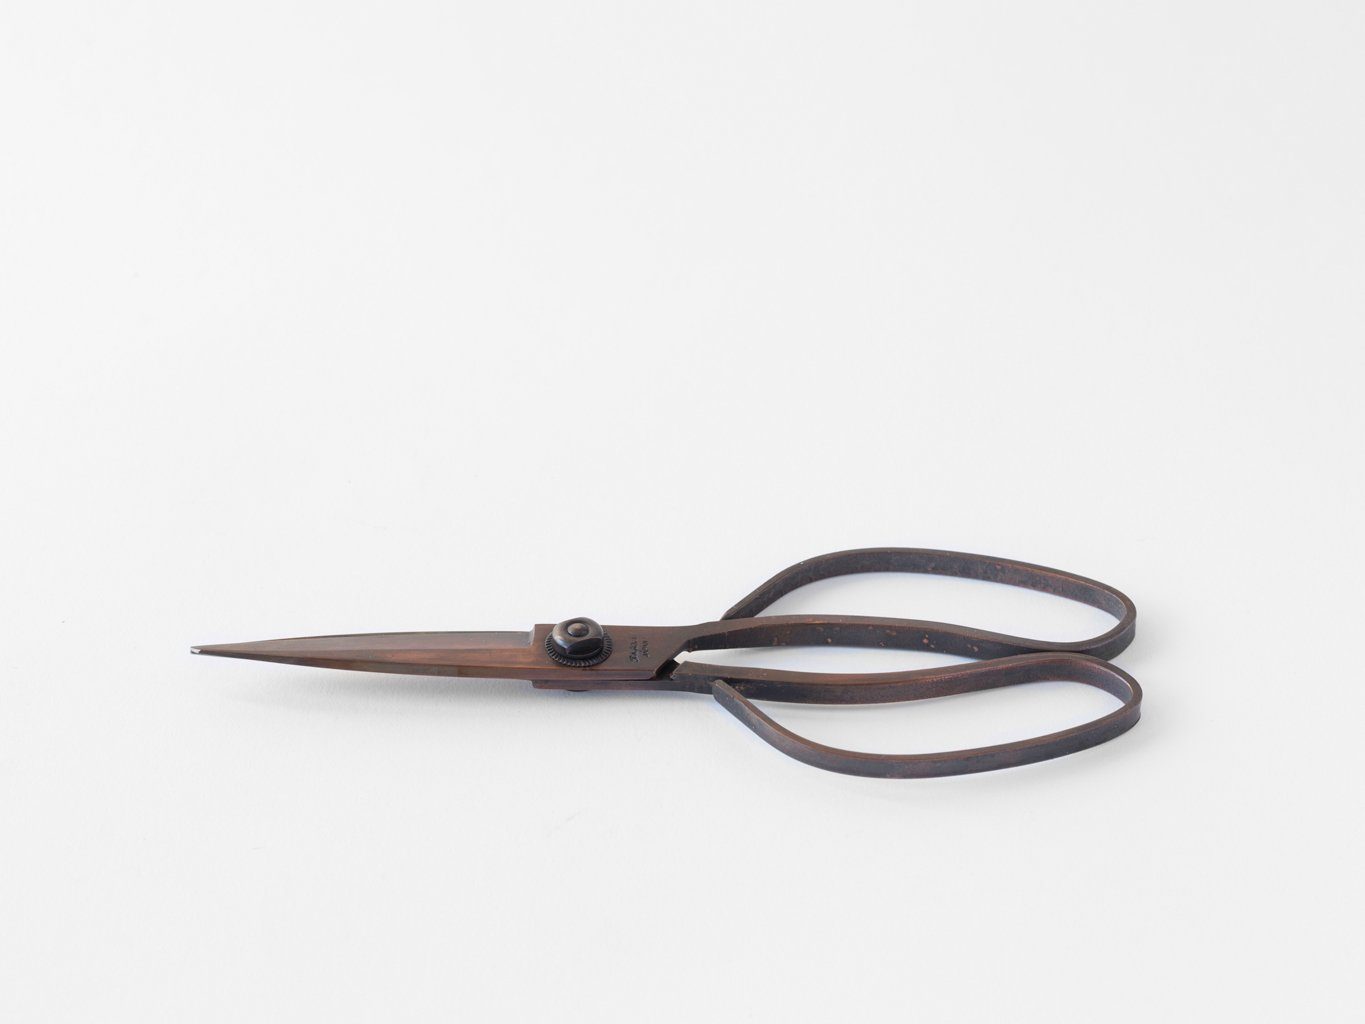 Tajika - Copper Household Scissors (Large)